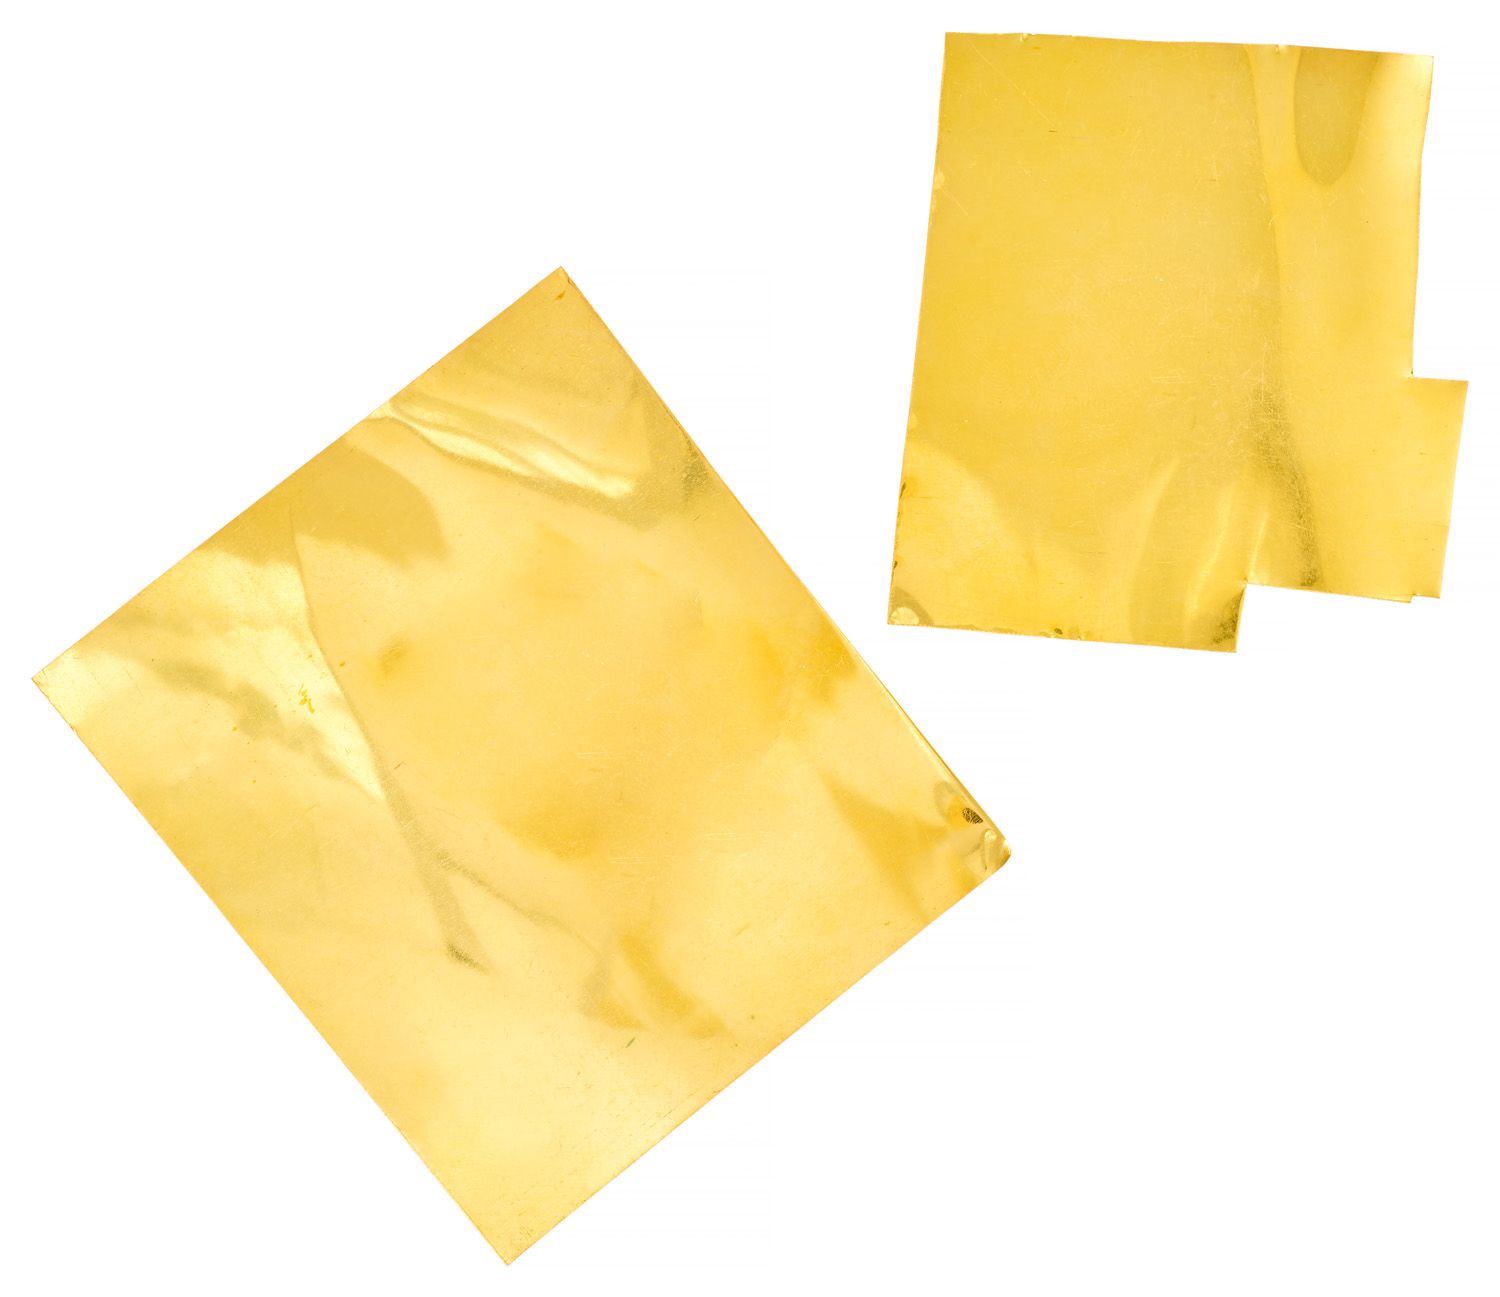 Plaques de soudure 黄金材质

一个重24.33克，另一个重38.25克（18K-750/1000）。